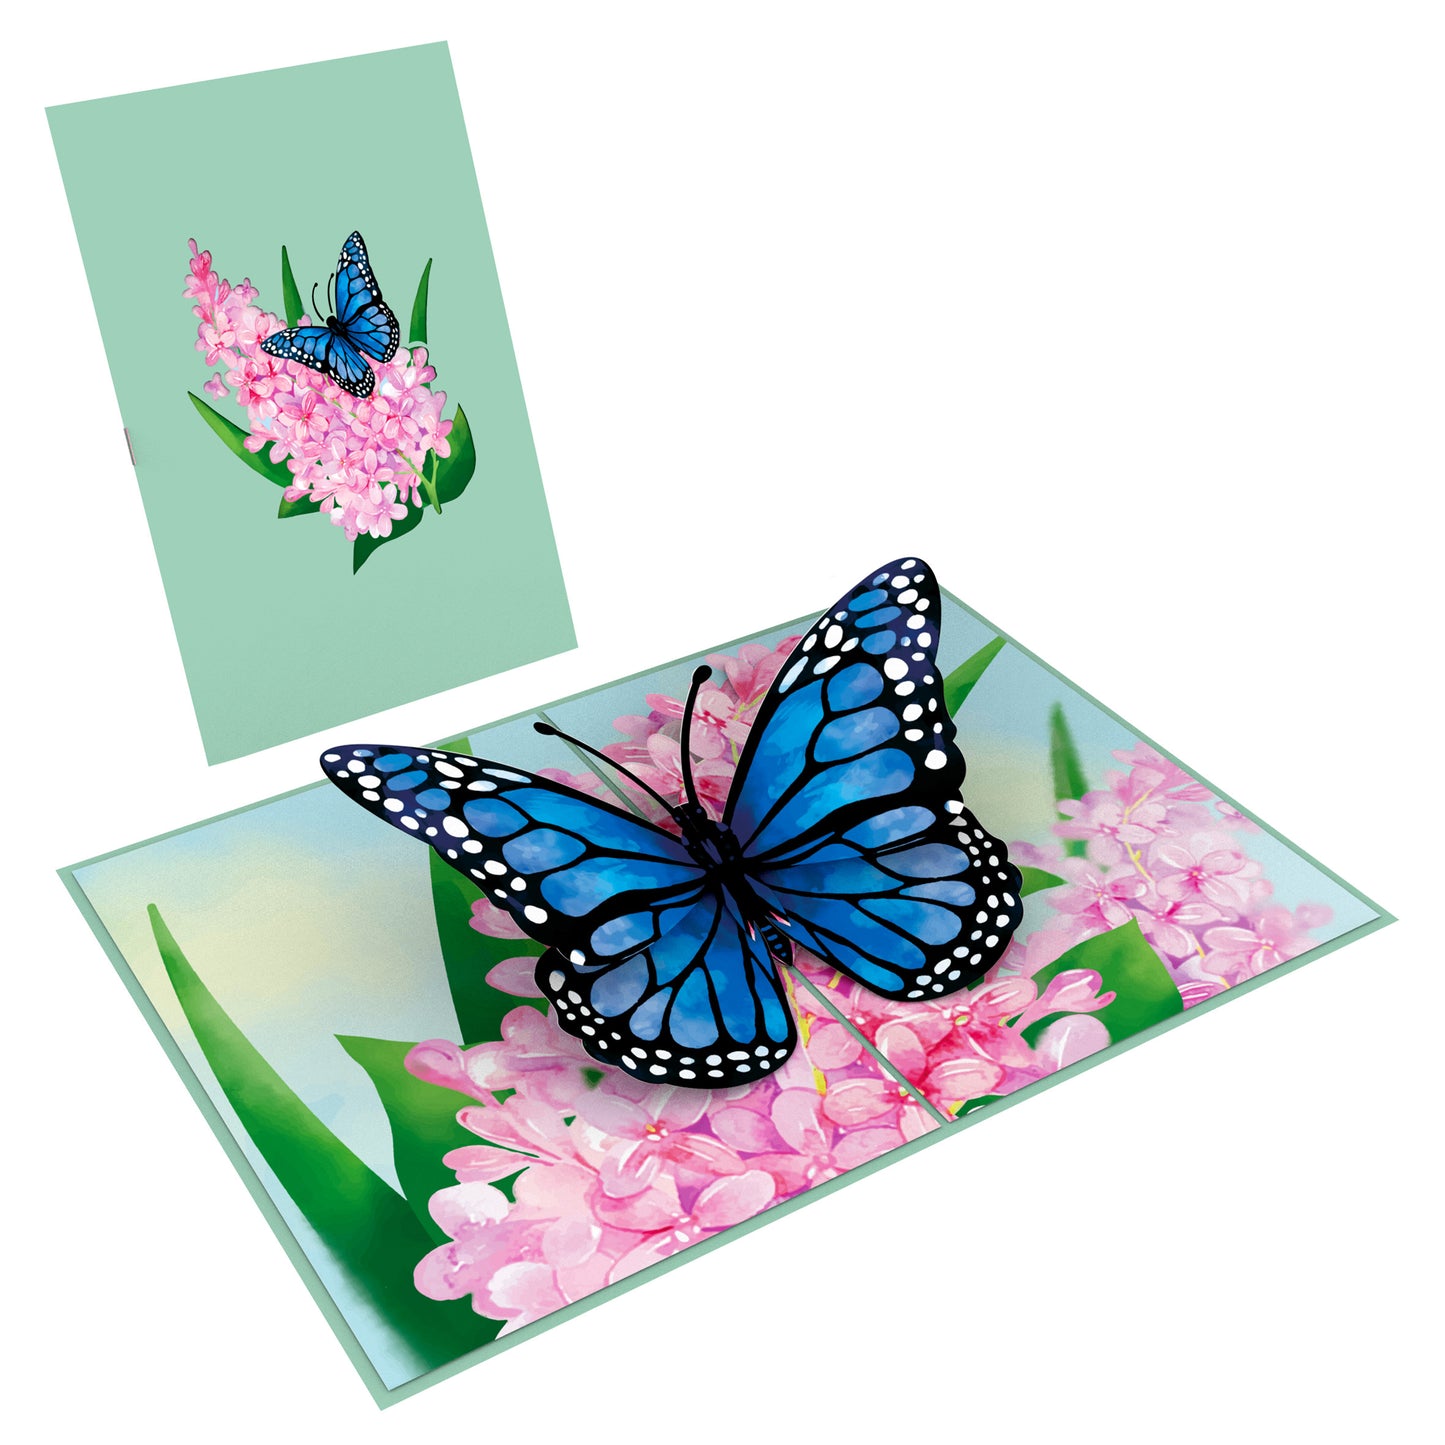 Blue Butterfly Pop-Up Card